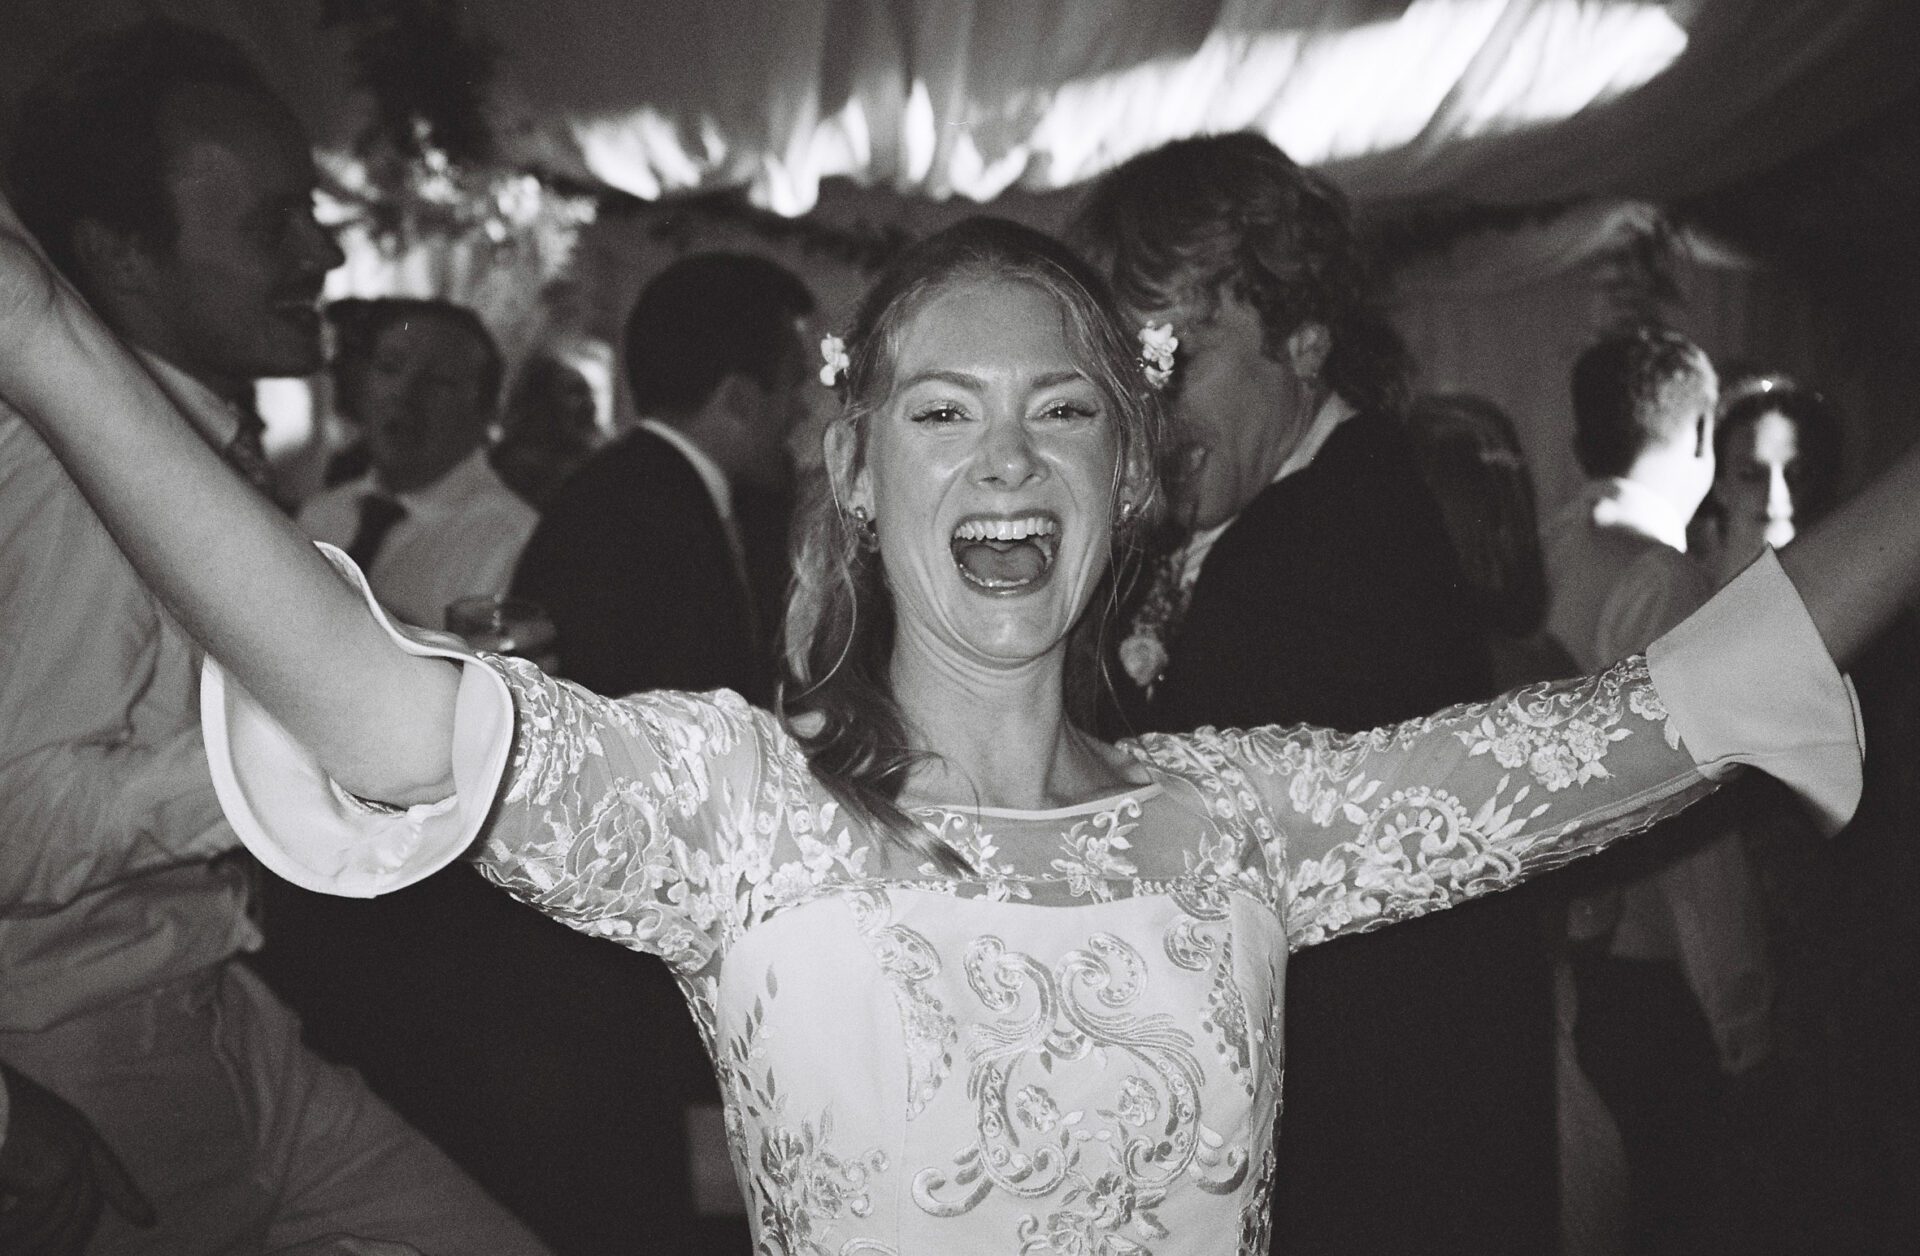 A 35mm portrait of the bride on the dancefloor